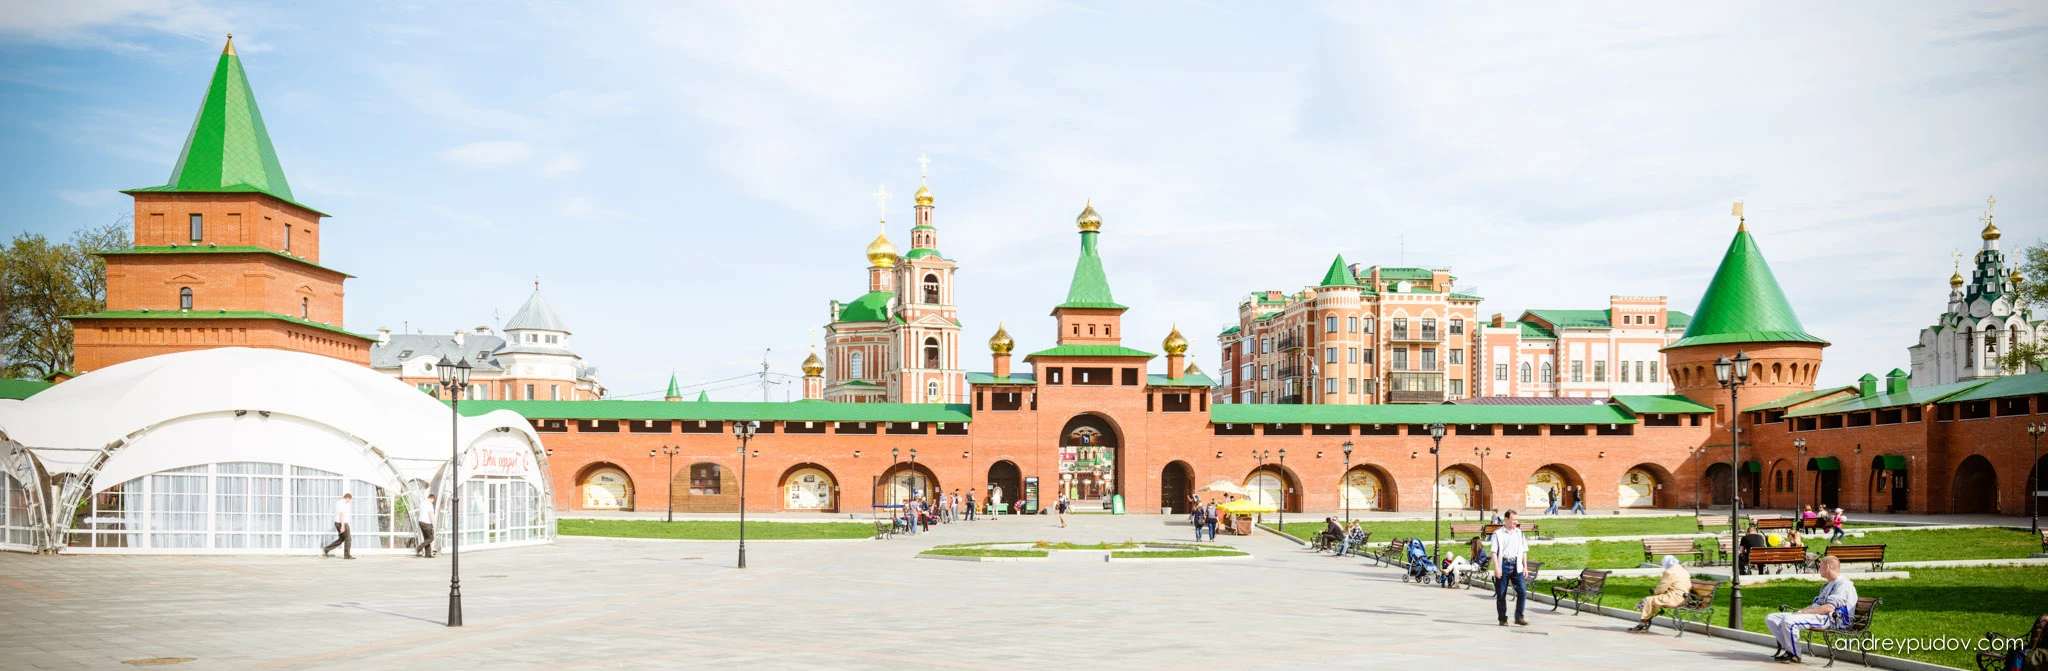 Yoshkar-Ola. Tsar's town on Kokshaga River - Tsarevokokshaisky Kremlin is a modern replica of the historical fortress, built in 1584 by the order of Tsar Feodor I.